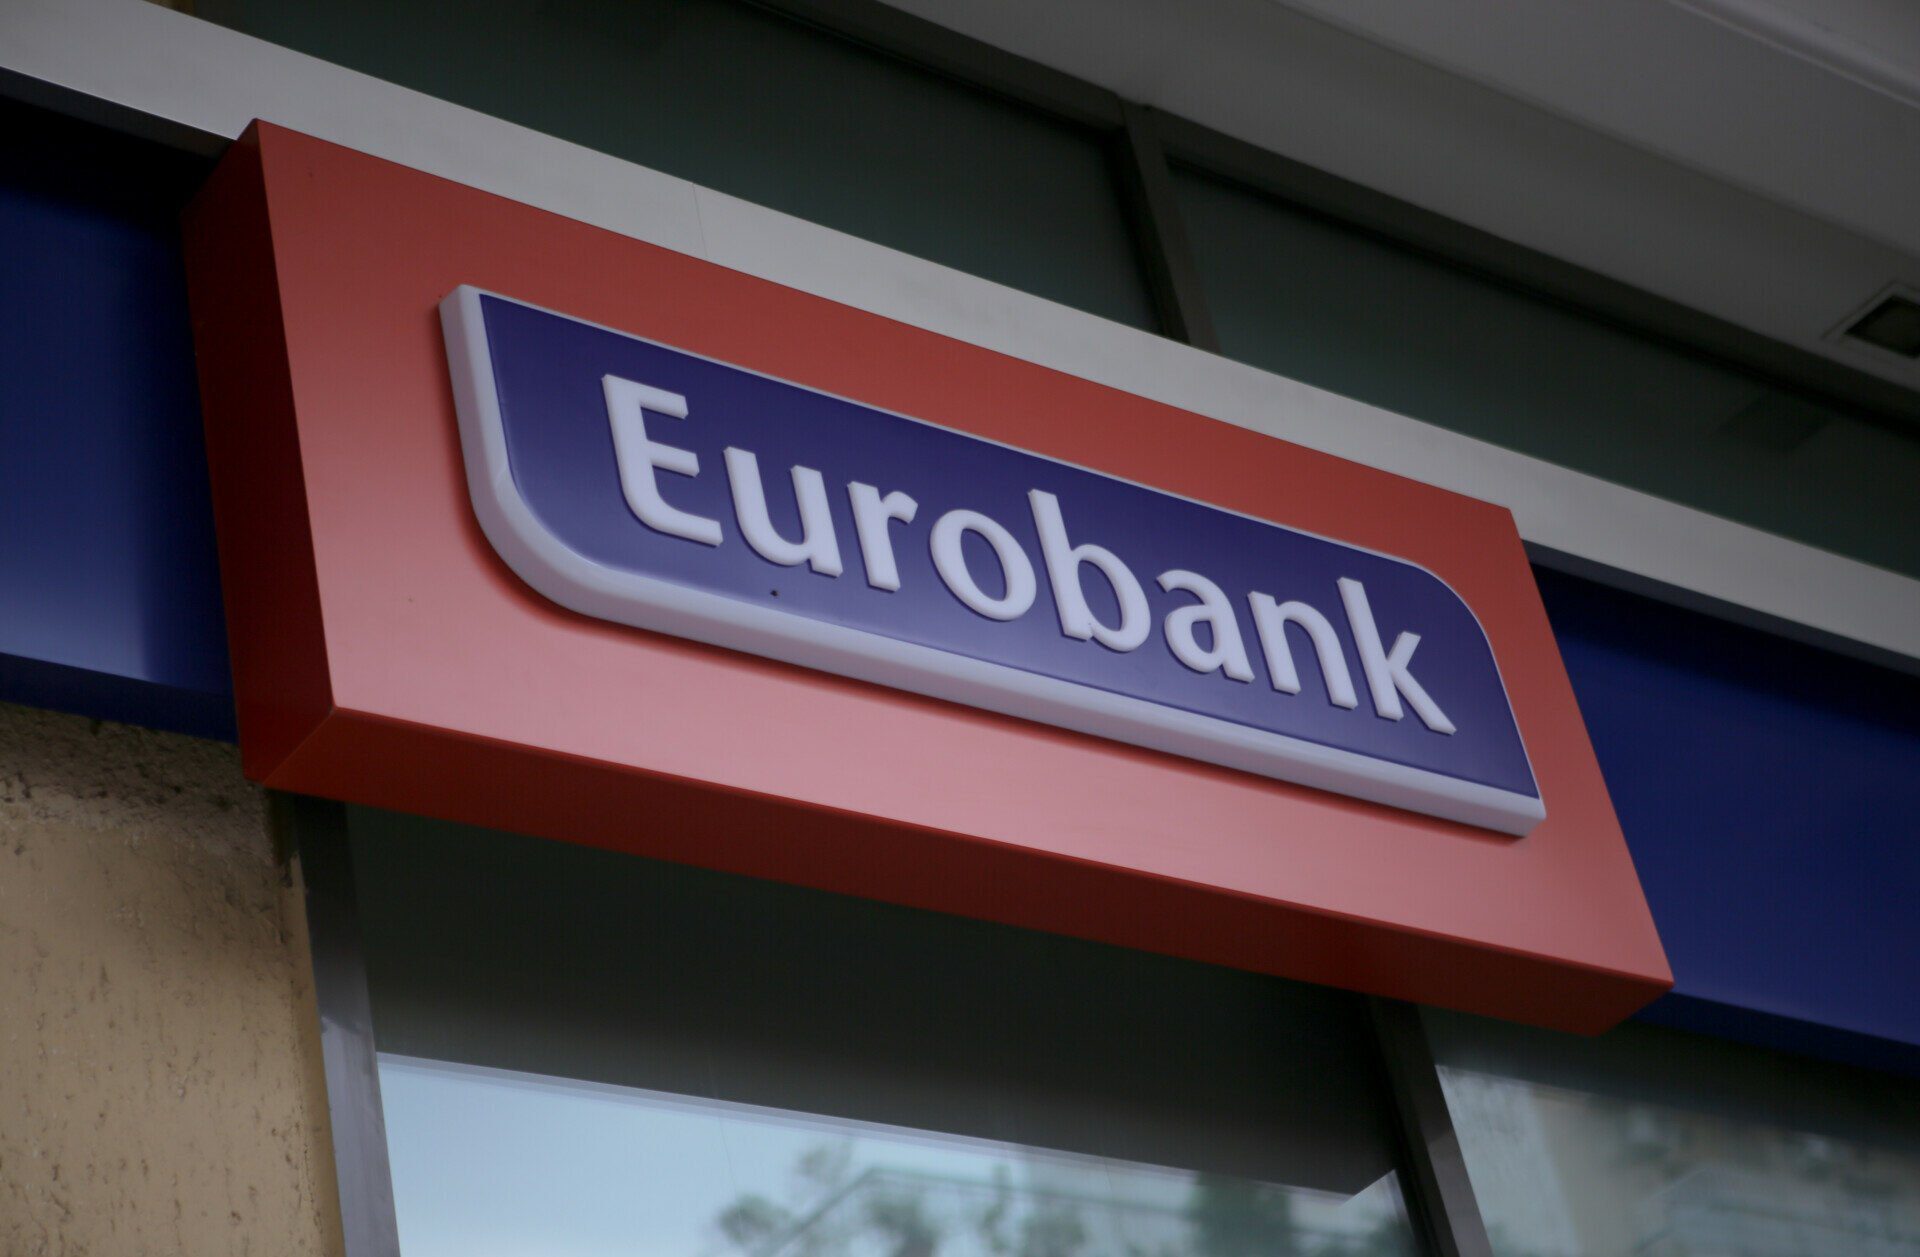 Eurobank: Άντλησε 500 εκατ. ευρώ με επιτόκιο 7,125%